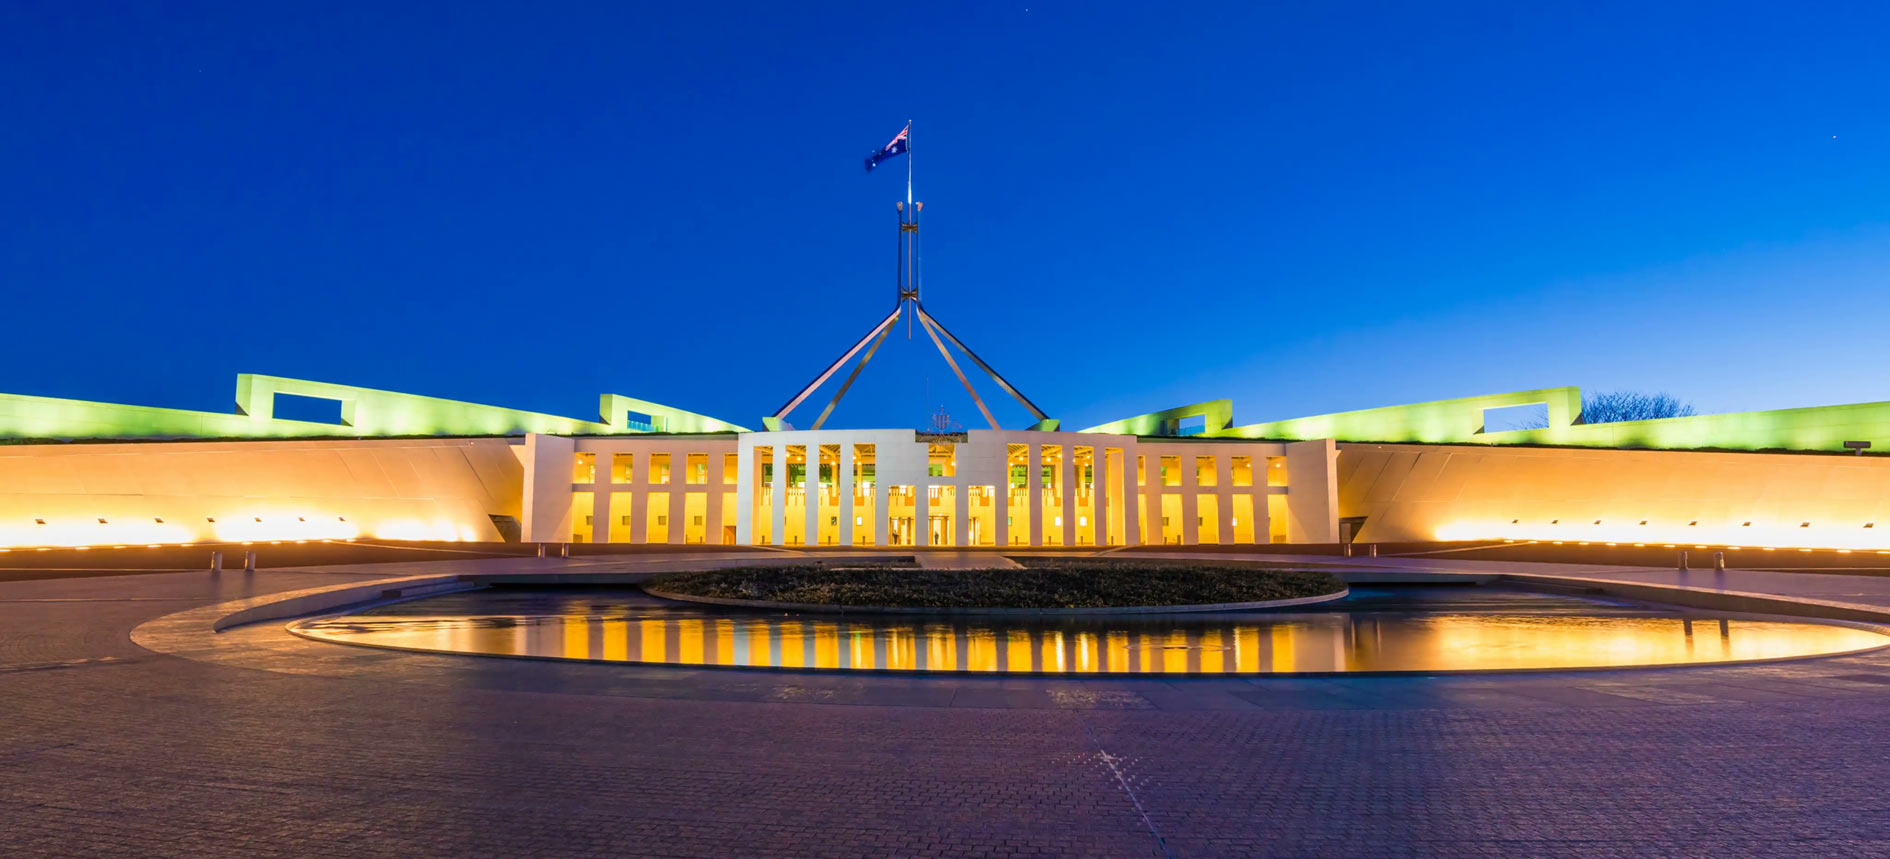 4k Hyperlapse Video Of Parliament House In Canberra Australia From Day To Night Rwzanzpi V2